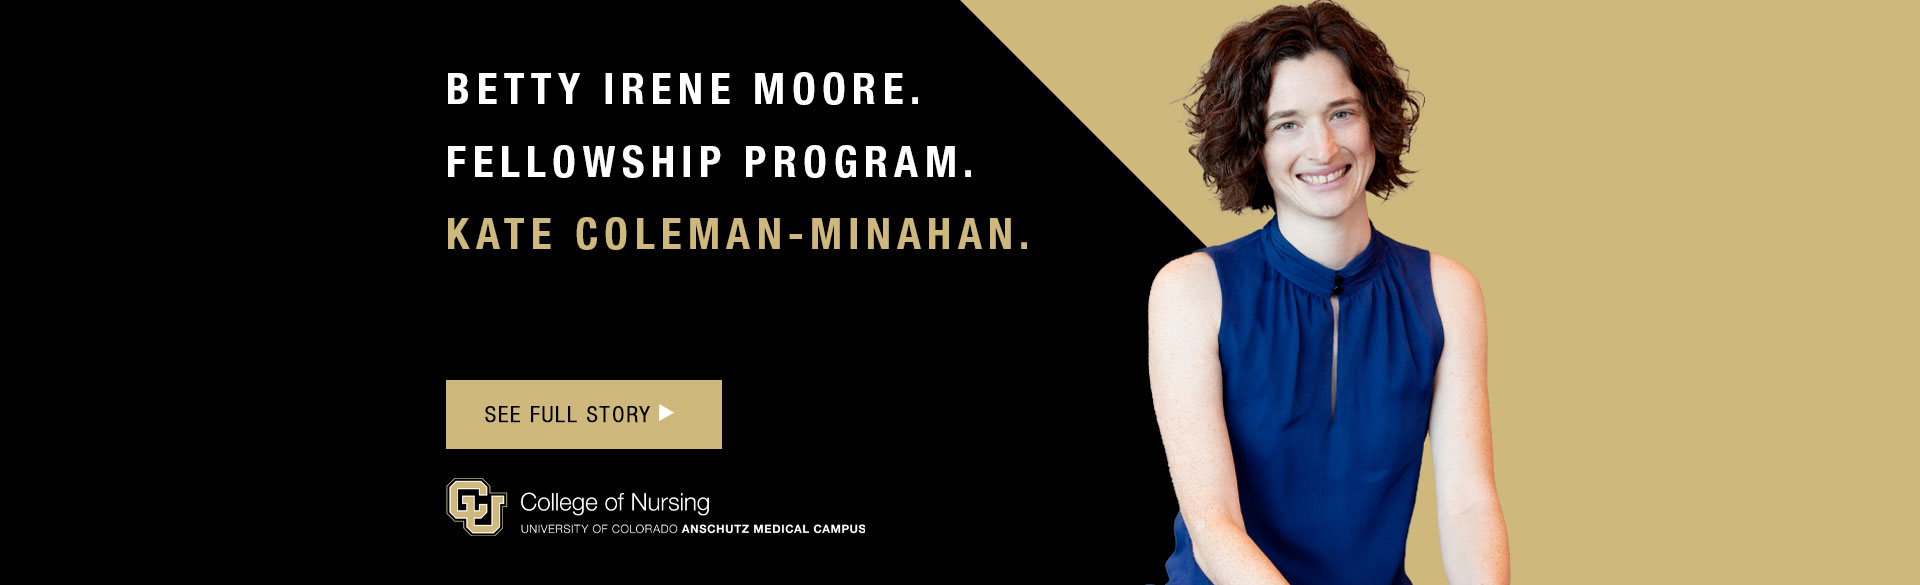 CU College of Nursing faculty Kate Coleman-Minahan Joins Betty Irene Moore Fellowship Program